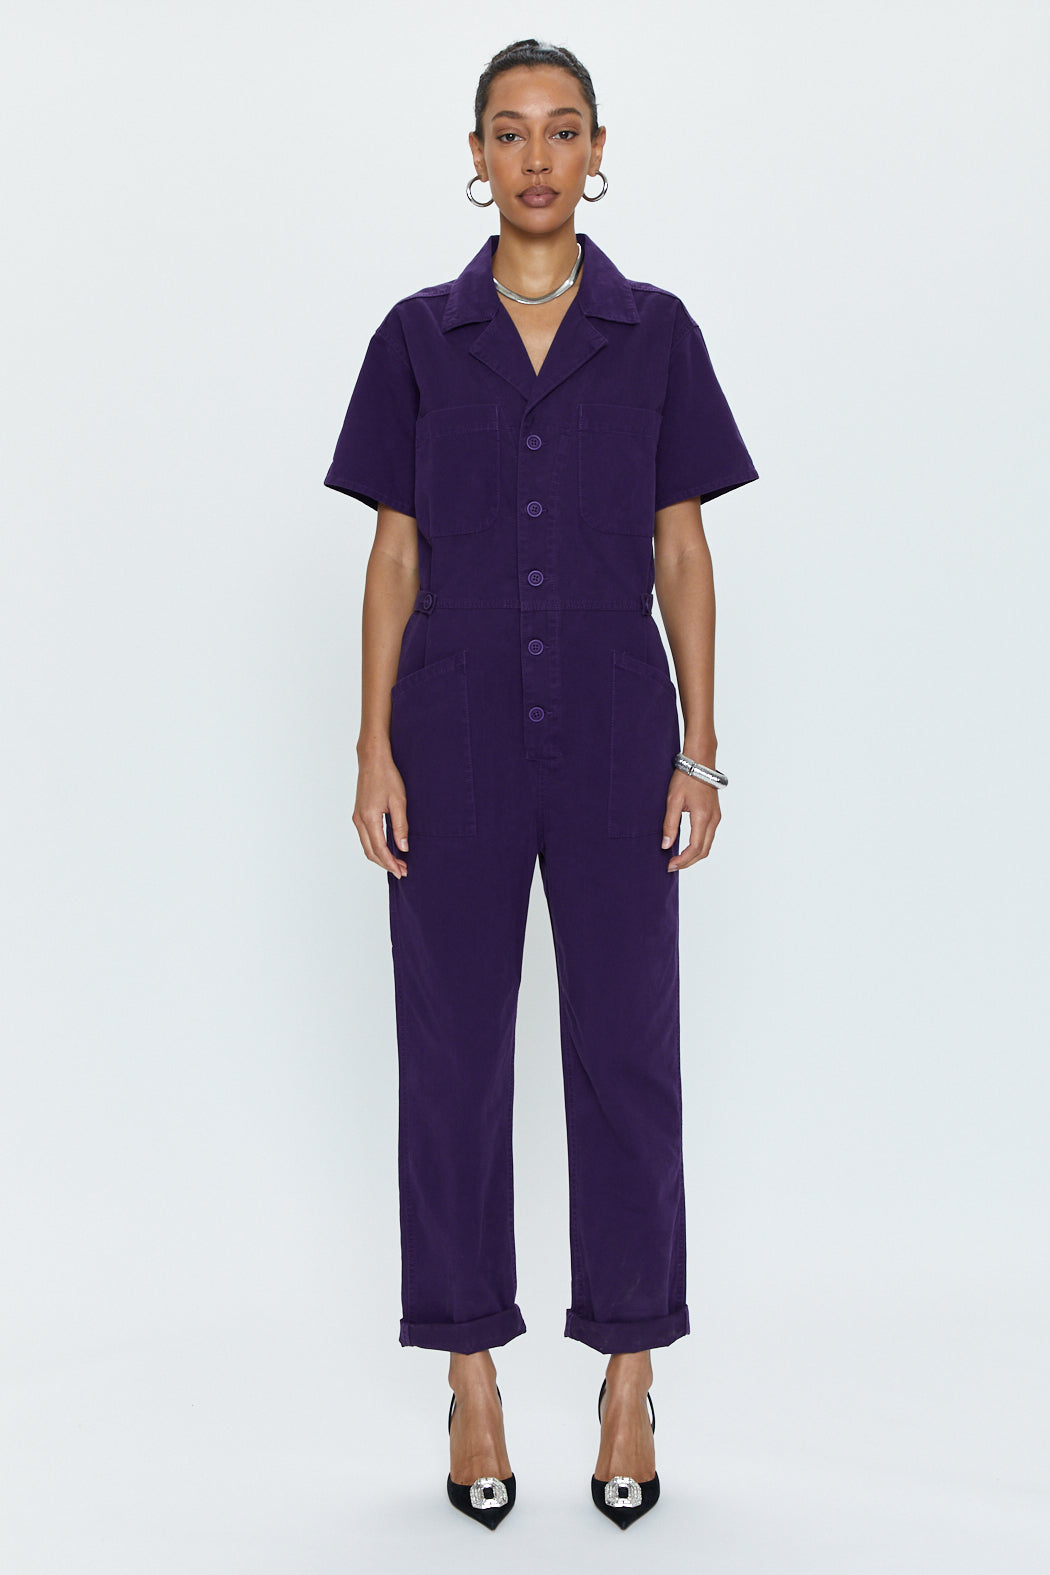 Grover Short Sleeve Field Suit - Lila Purple